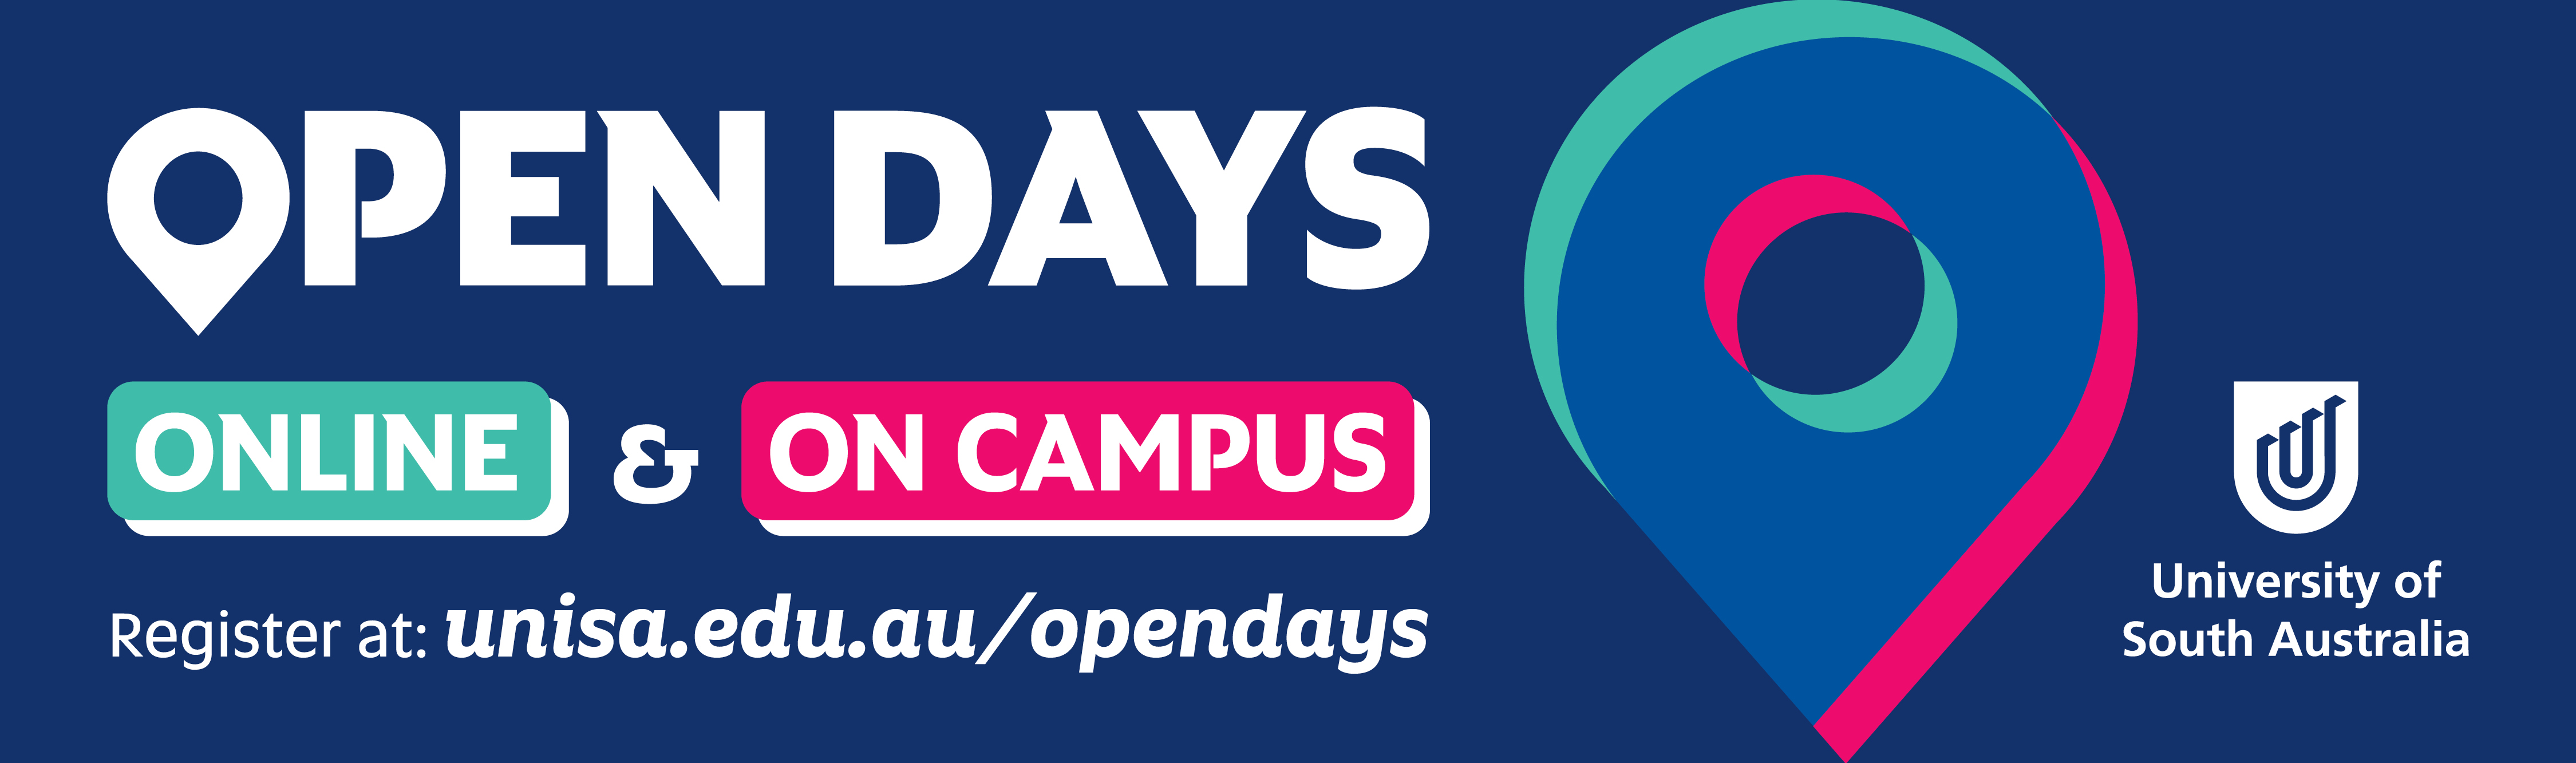 Open Days online & on campus - Register at : unisa.edu.au/opendays